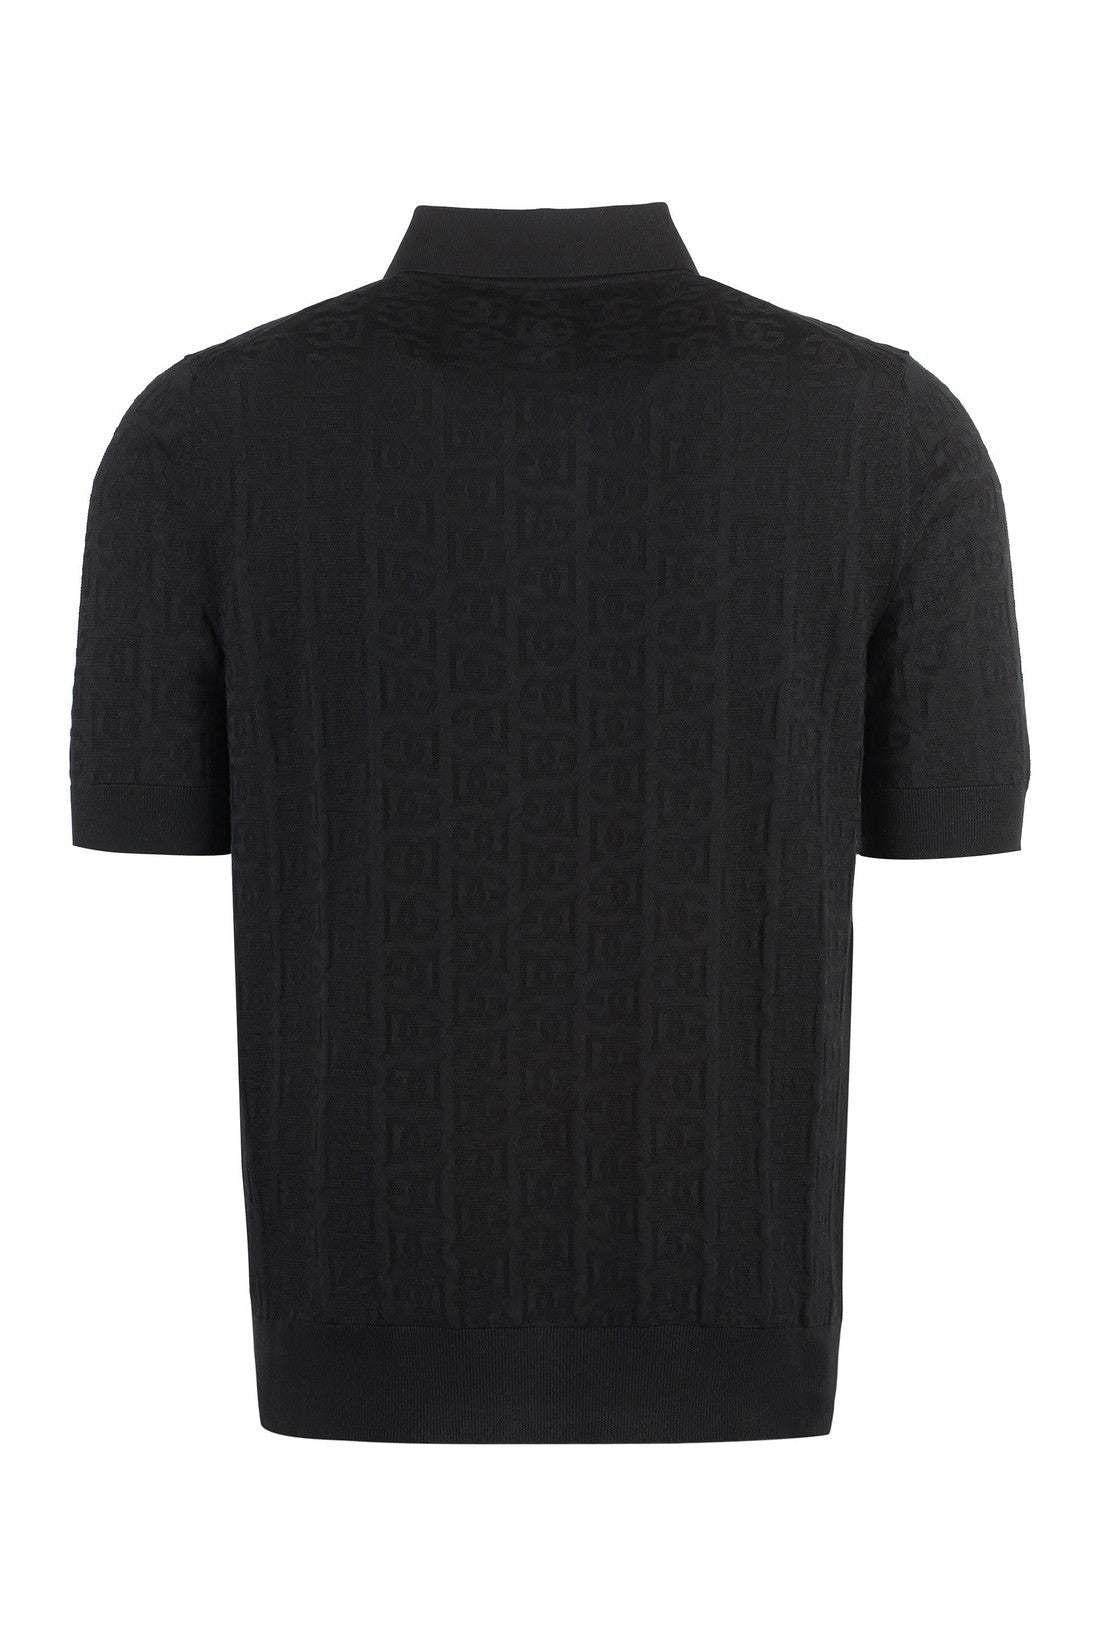 Dolce & Gabbana-OUTLET-SALE-Jacquard knit polo shirt-ARCHIVIST